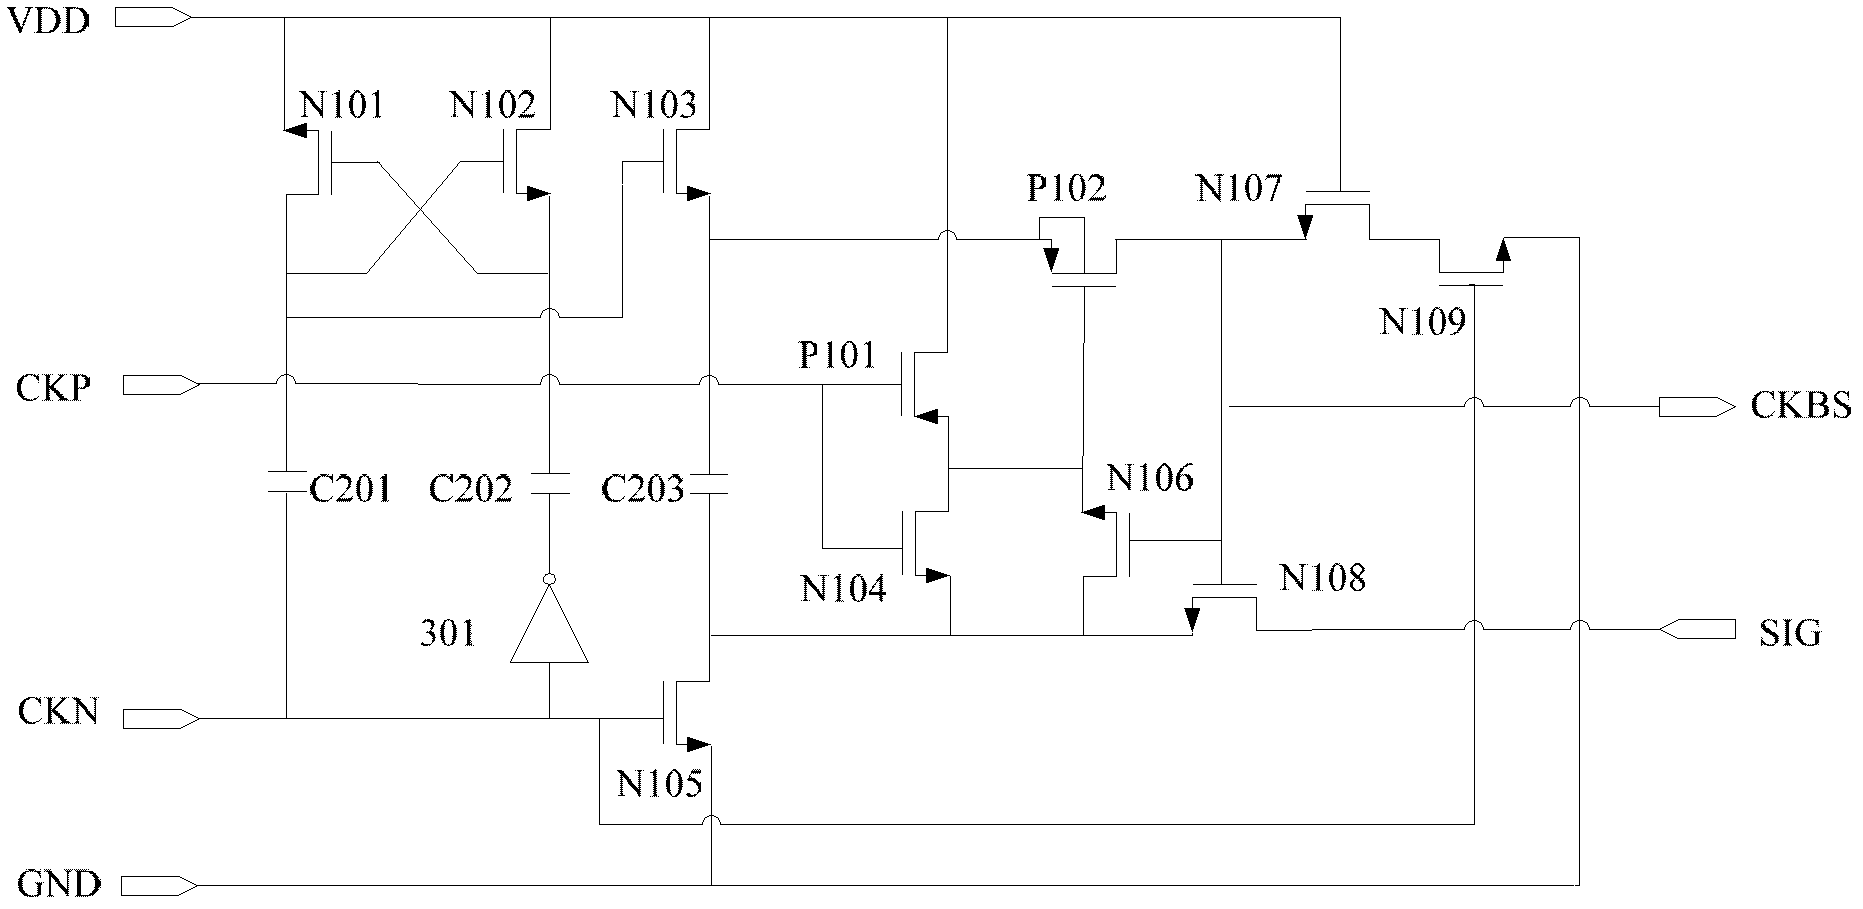 Clock generation circuit and analogue-to-digital converter (ADC) sampling circuit